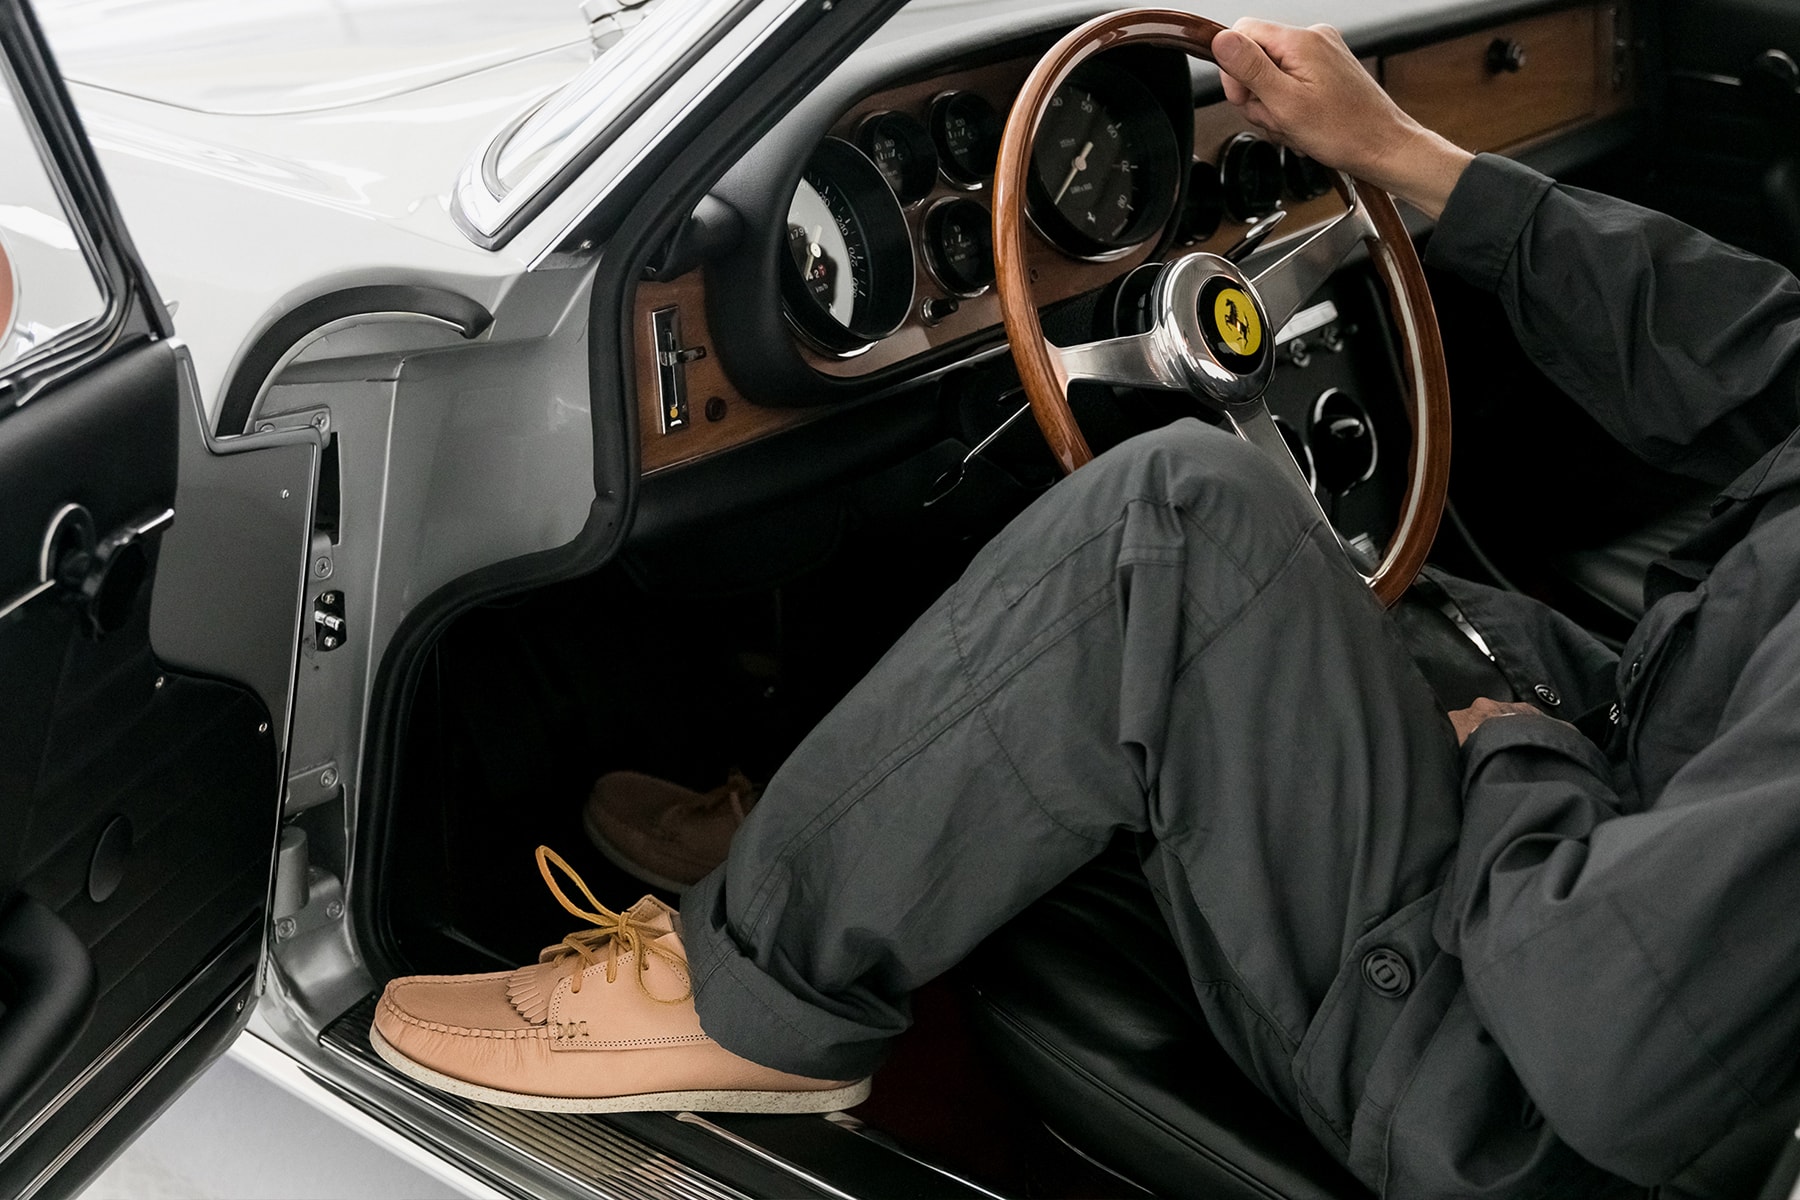 Period Correct yuketen collaboration driving shoes yuki matsuda leather beige kiltie california lookbook Ferrari 330 GT 2 2 footwear exclusive drop release date